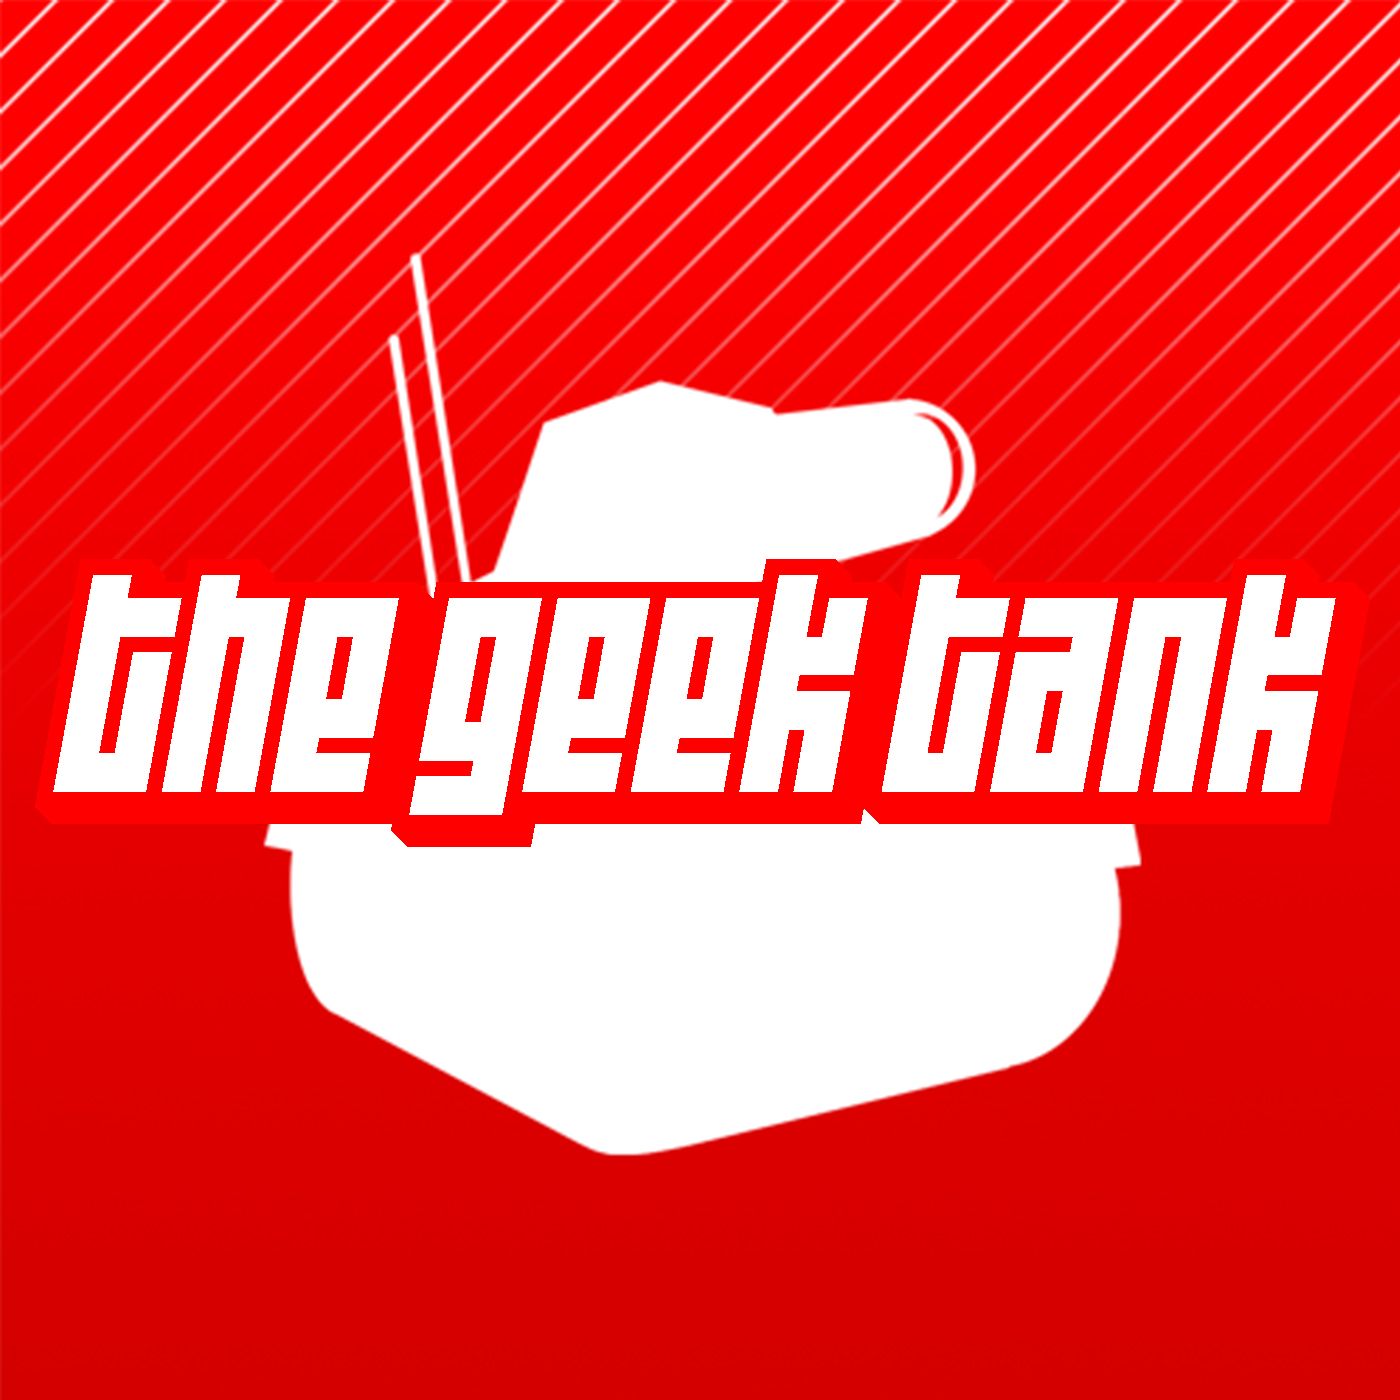 The Geek Tank